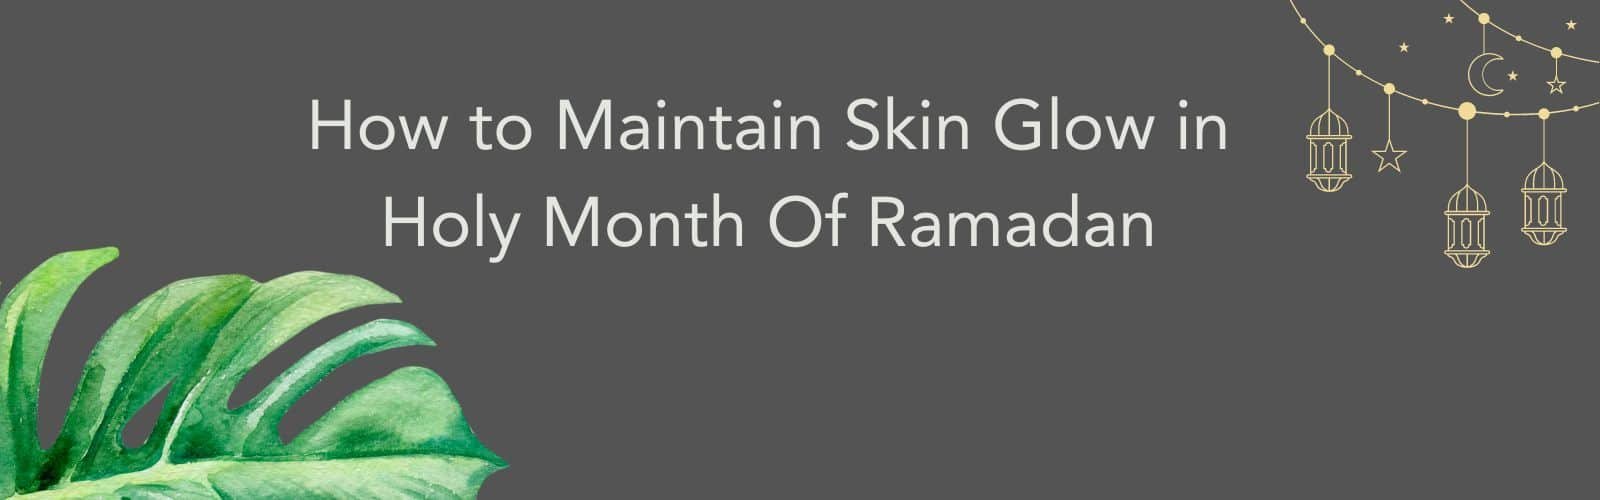 How to Maintain Skin Glow in Ramadan